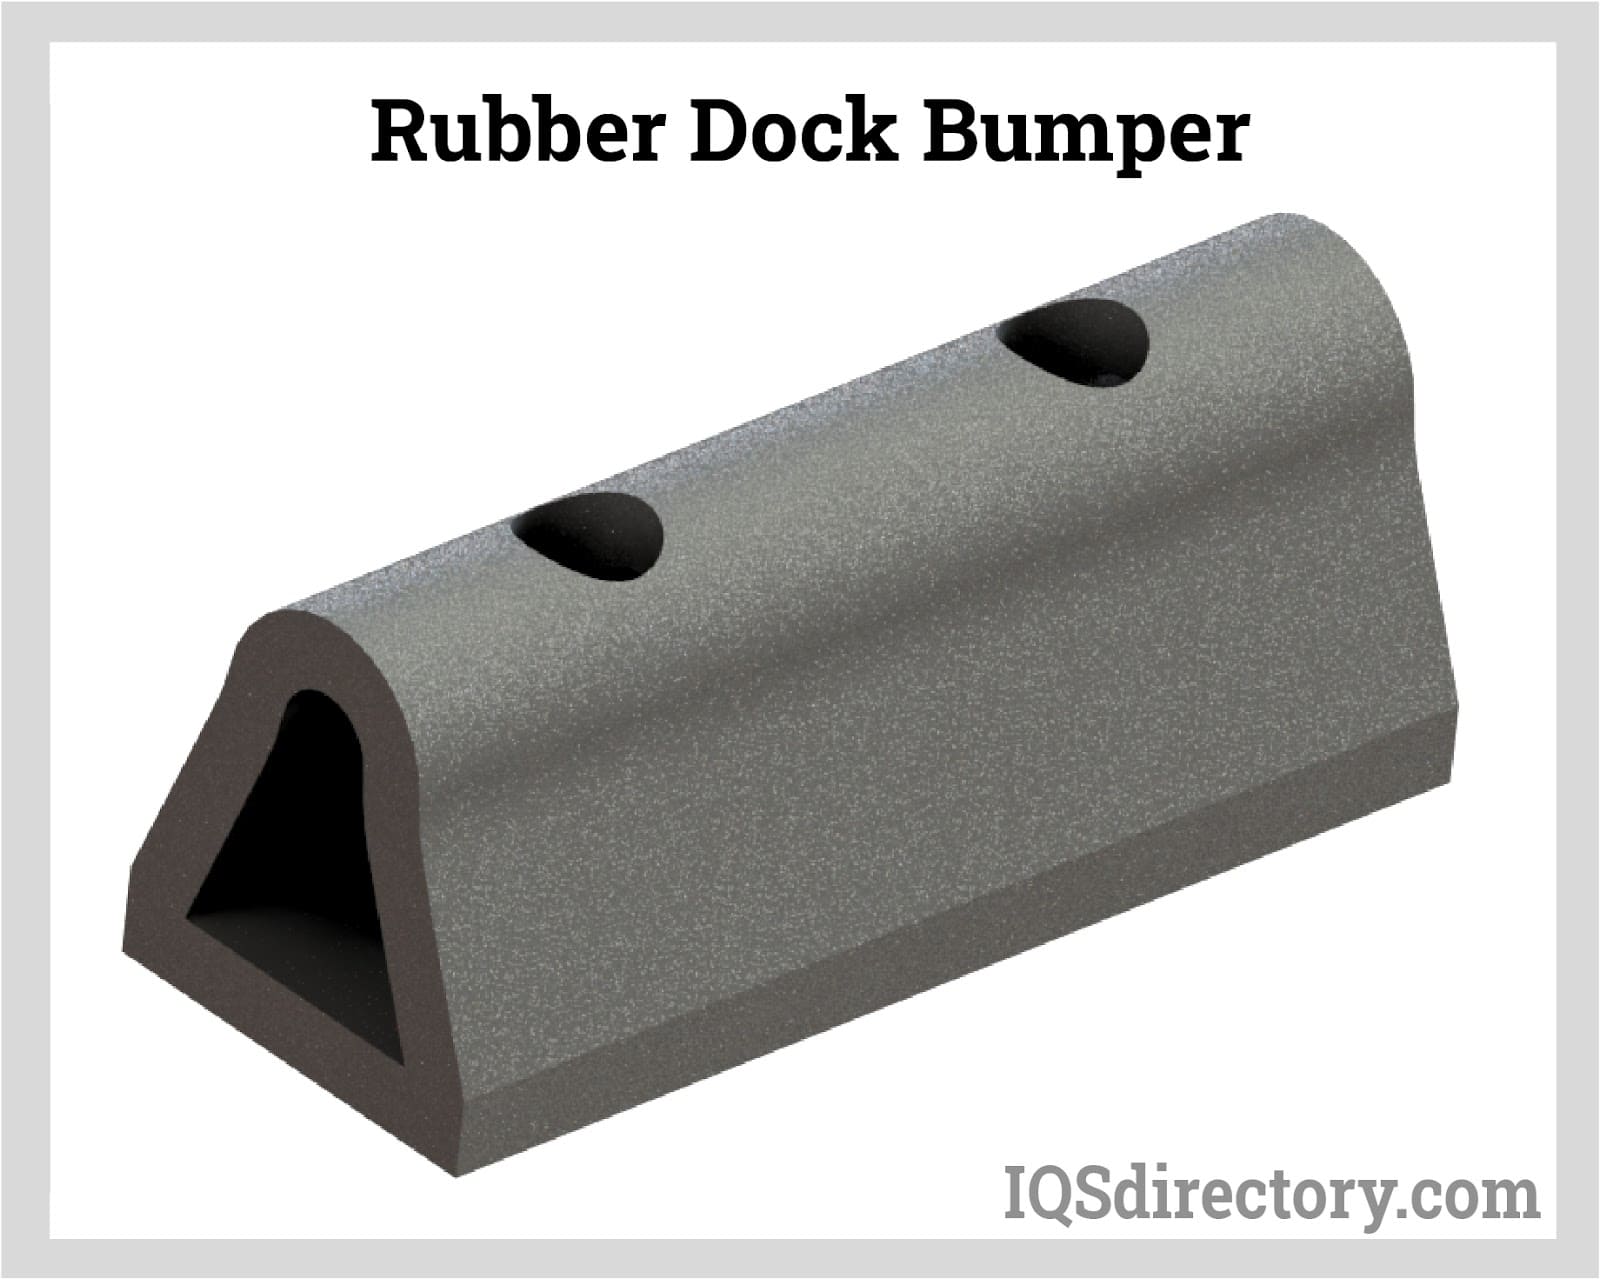 Rubber Dock Bumper